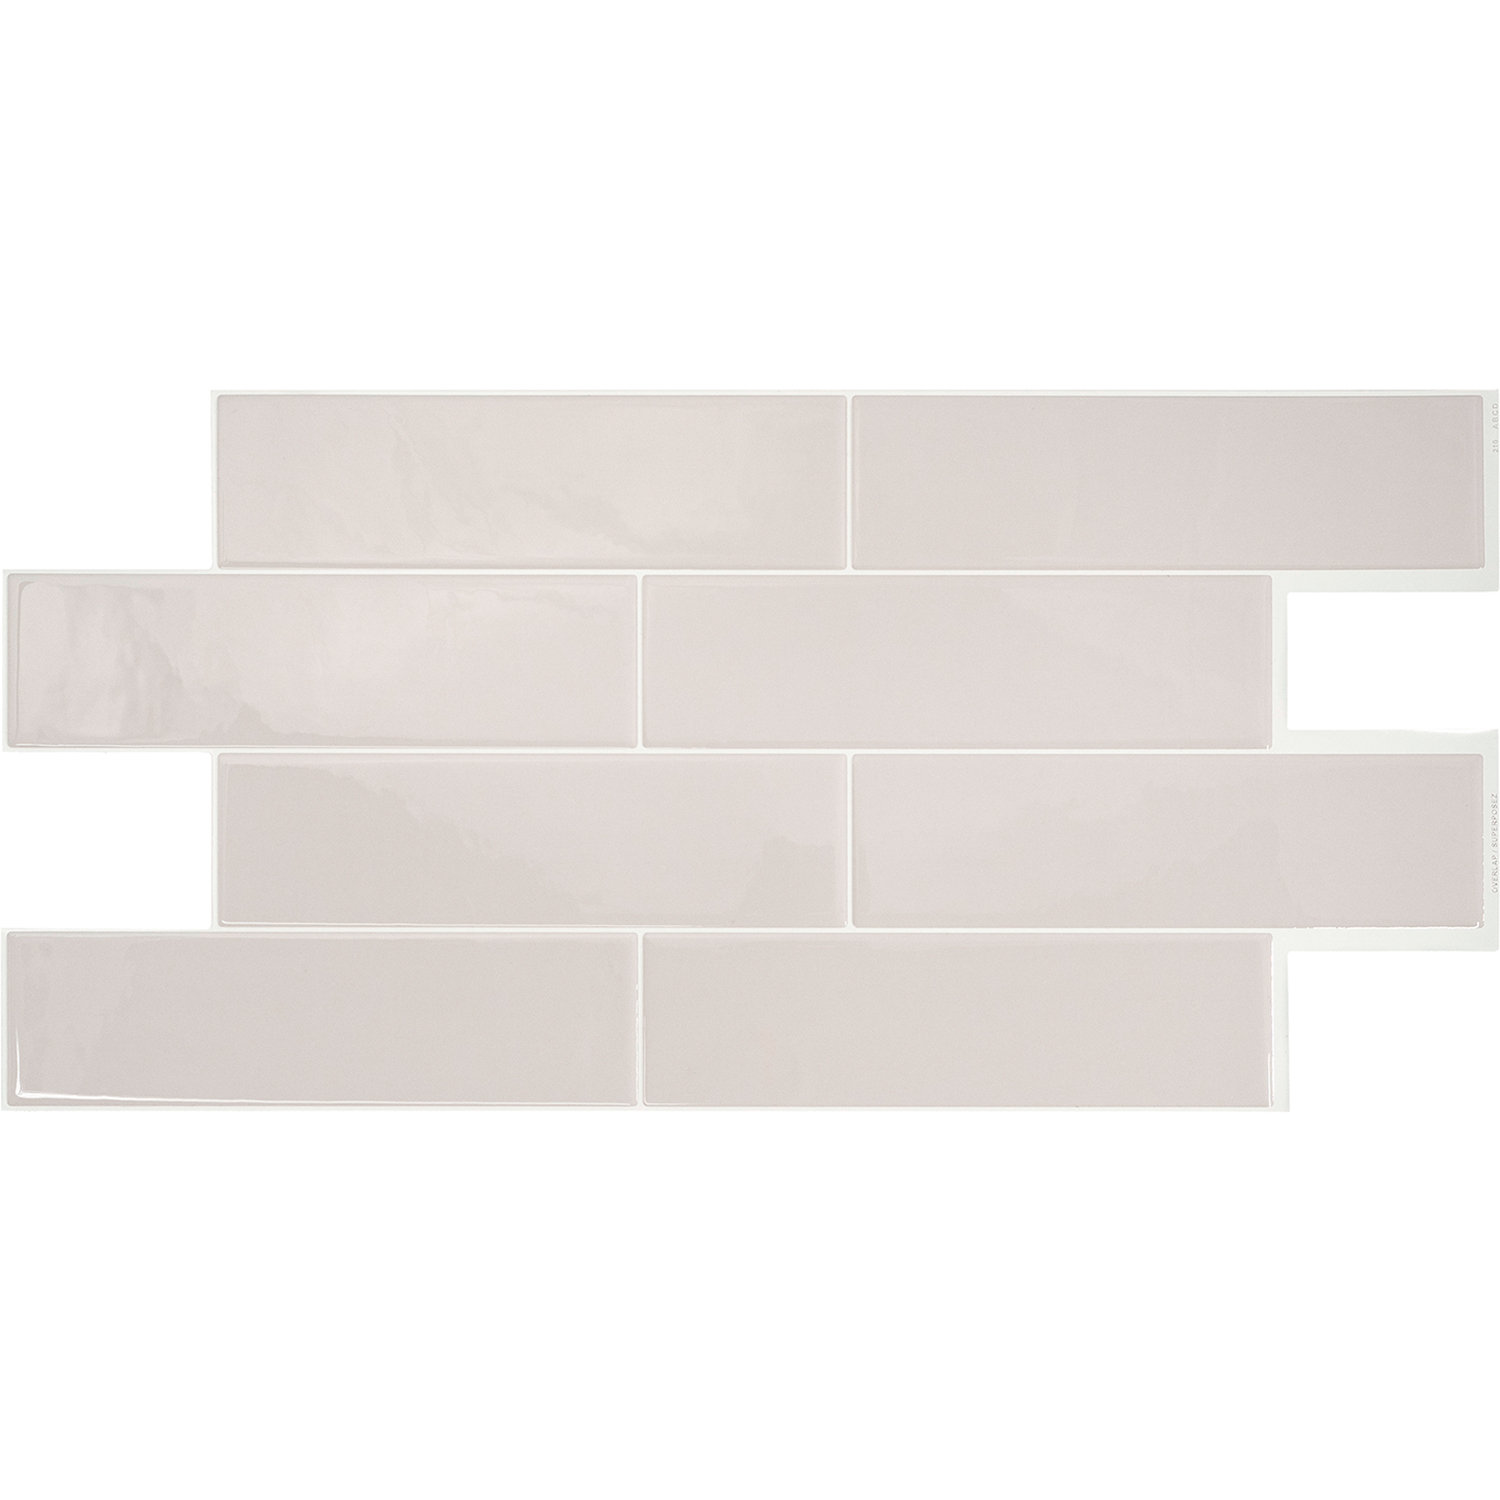 Smart Tiles Peel and Stick Backsplash - 5 Sheets of 11.43 x 9 - 3D Adhesive Peel and Stick Tile Backsplash for Kitchen, Bathroom, Wall Tile